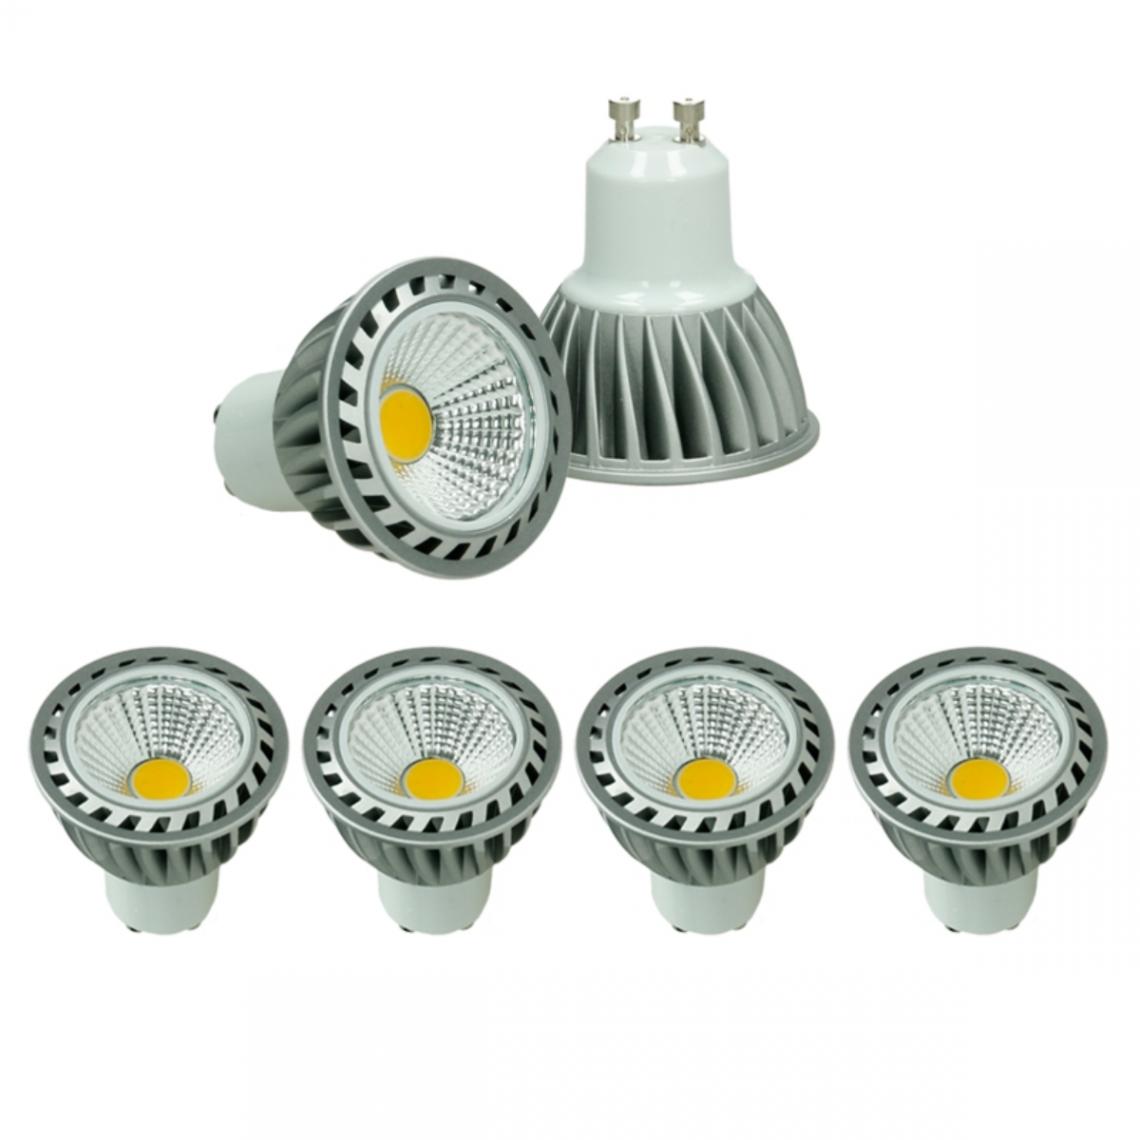 Ecd Germany - ECD Germany 4 x 4W GU10 LED Spot Ampoule Lampe Spot COB Blanc Chaud - Ampoules LED